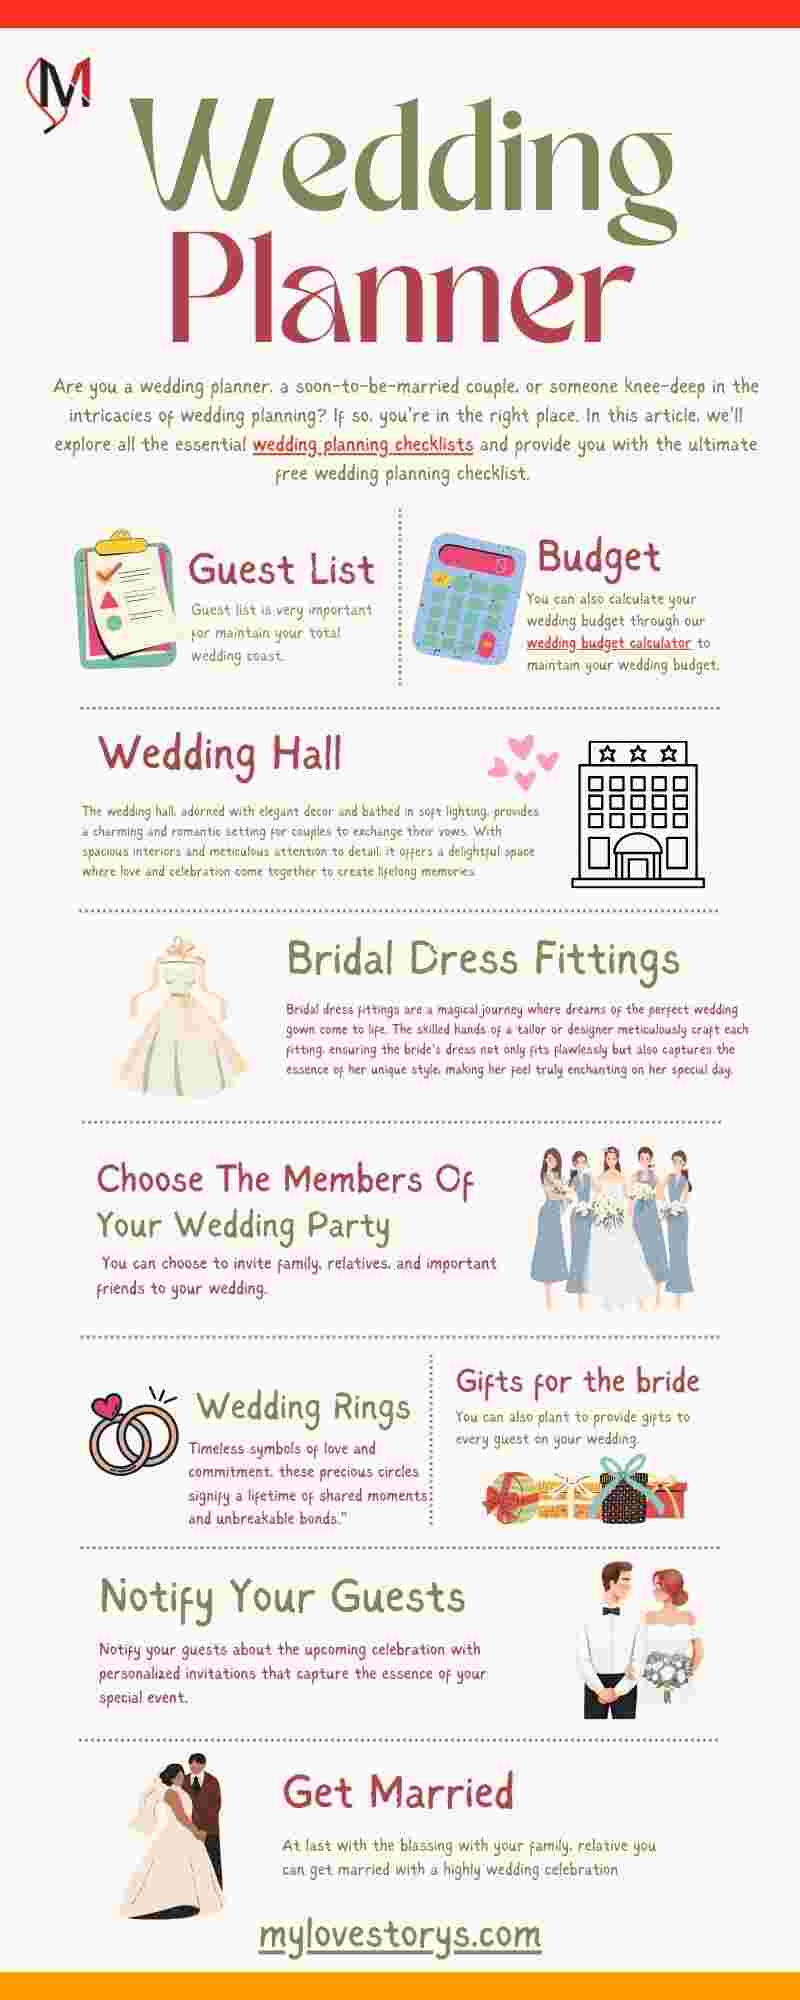 Wedding infographic